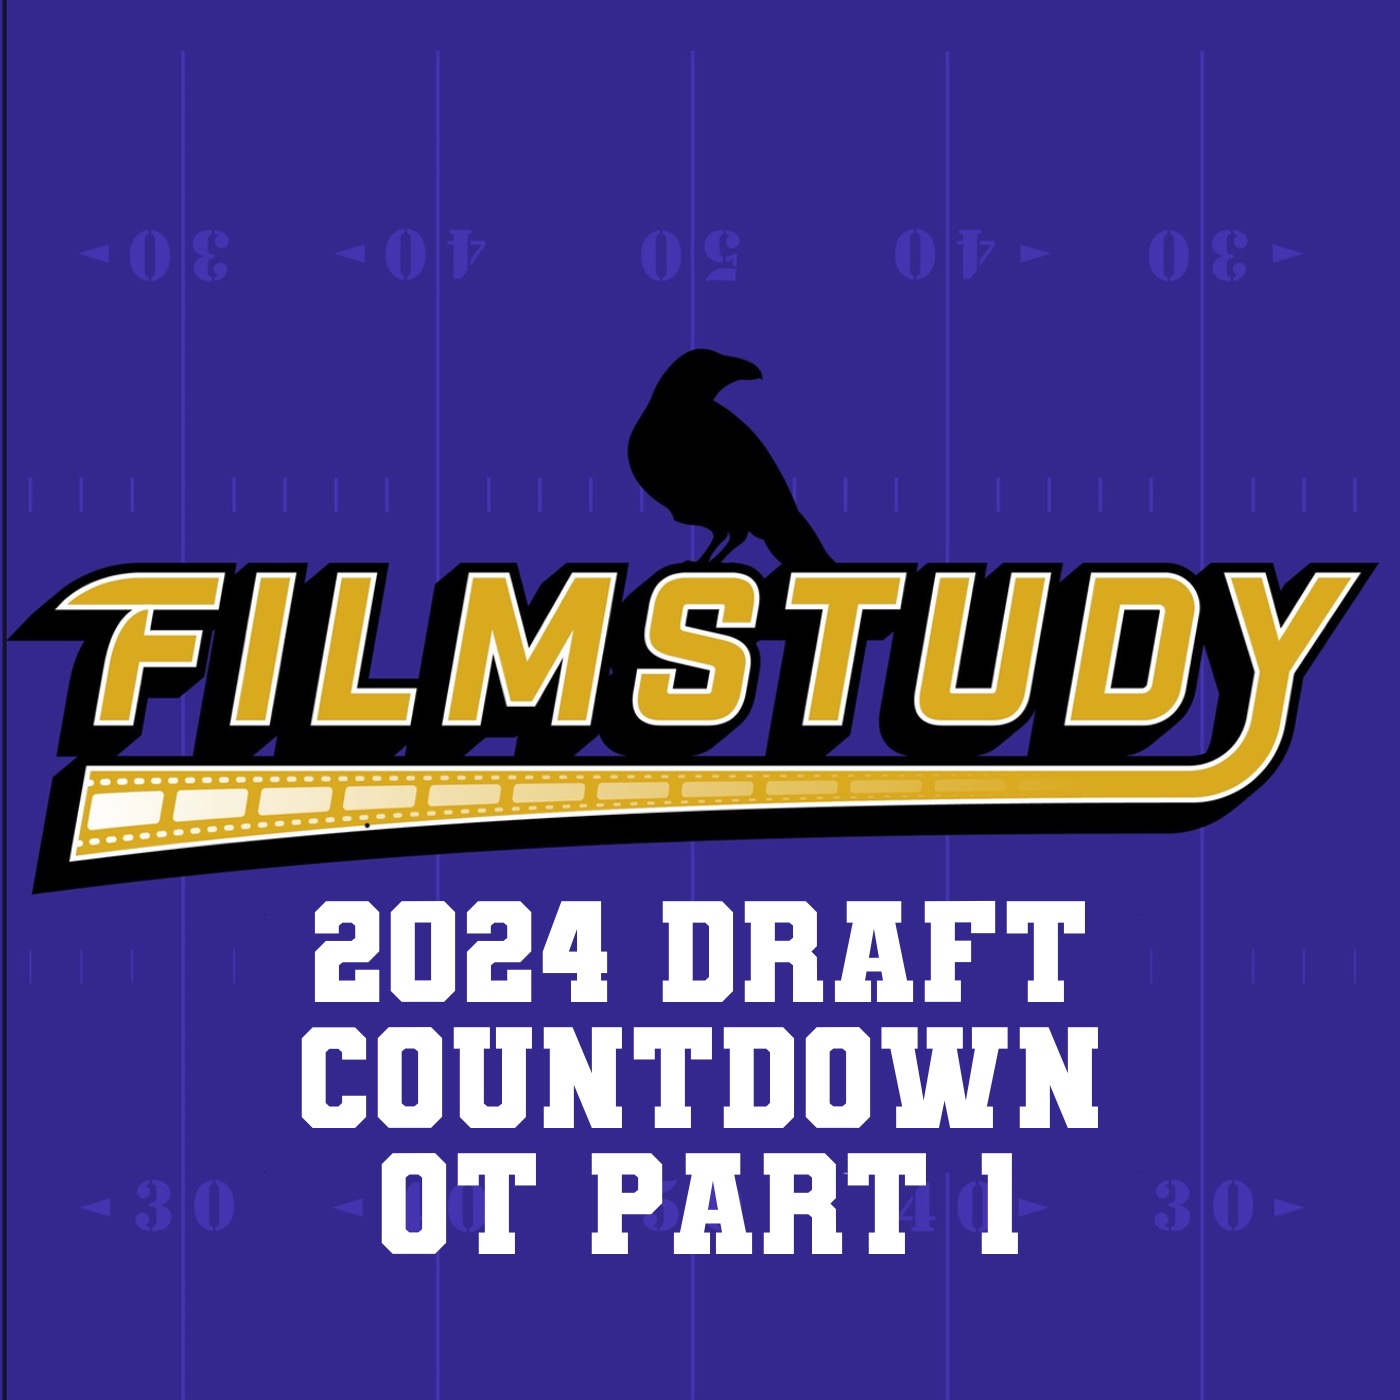 2024 Draft Countdown OT Part 1